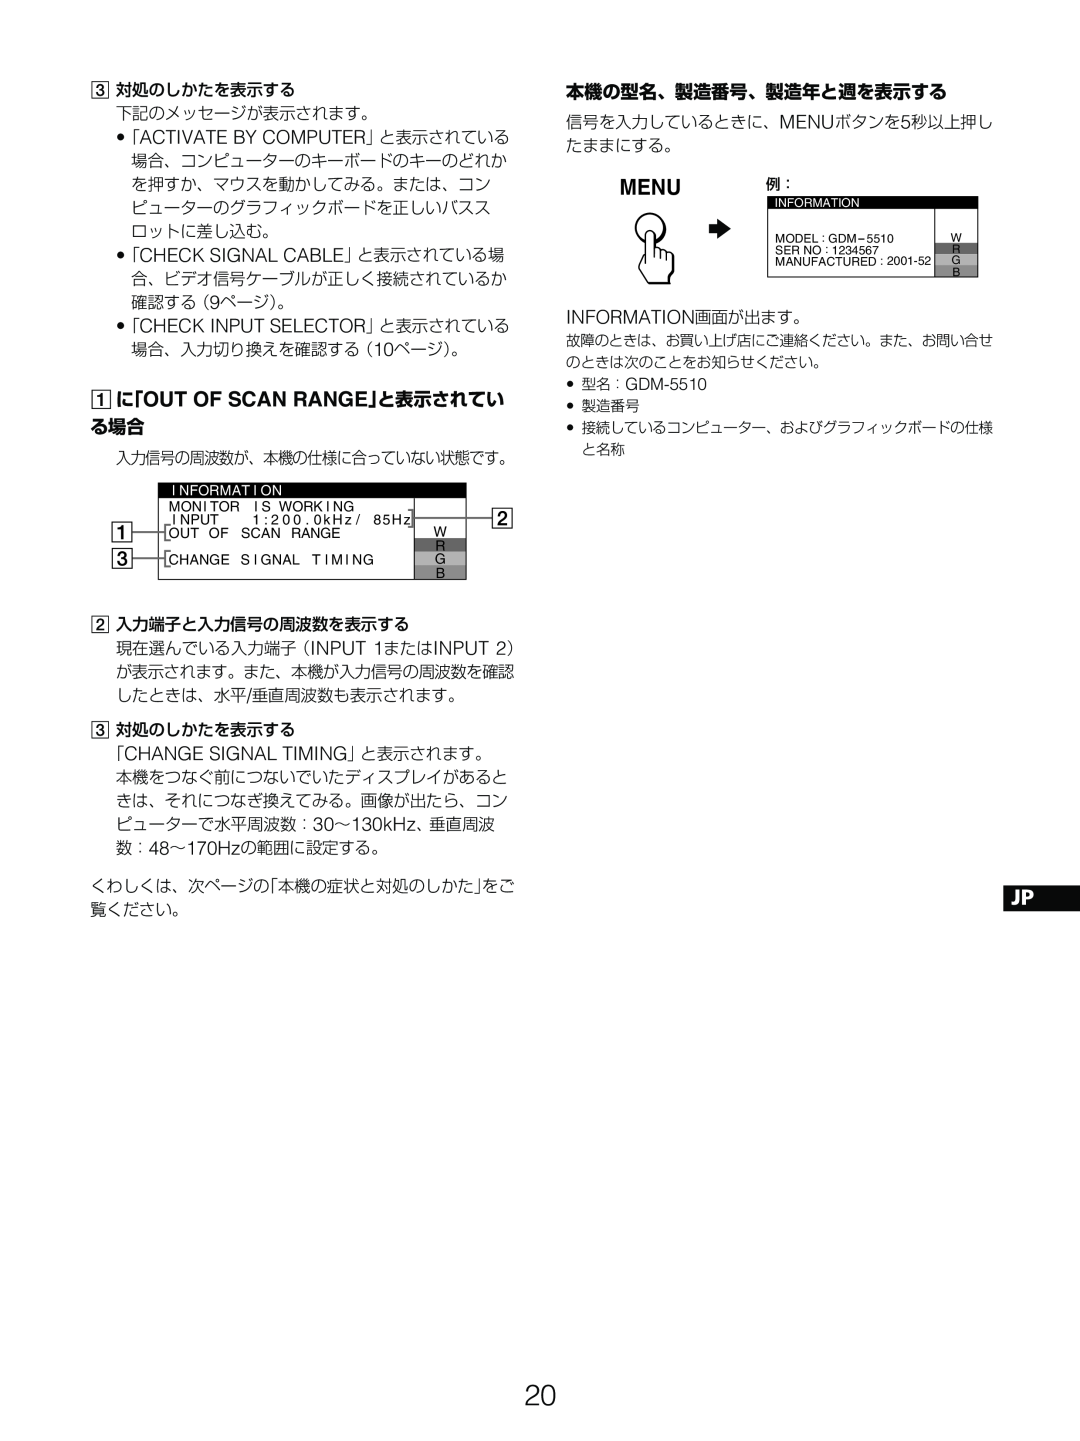 Sony GDM-5510 operating instructions Menu, 1に「OUT OF SCAN RANGE」と表示されてい, 本機の型名、製造番号、製造年と週を表示する 